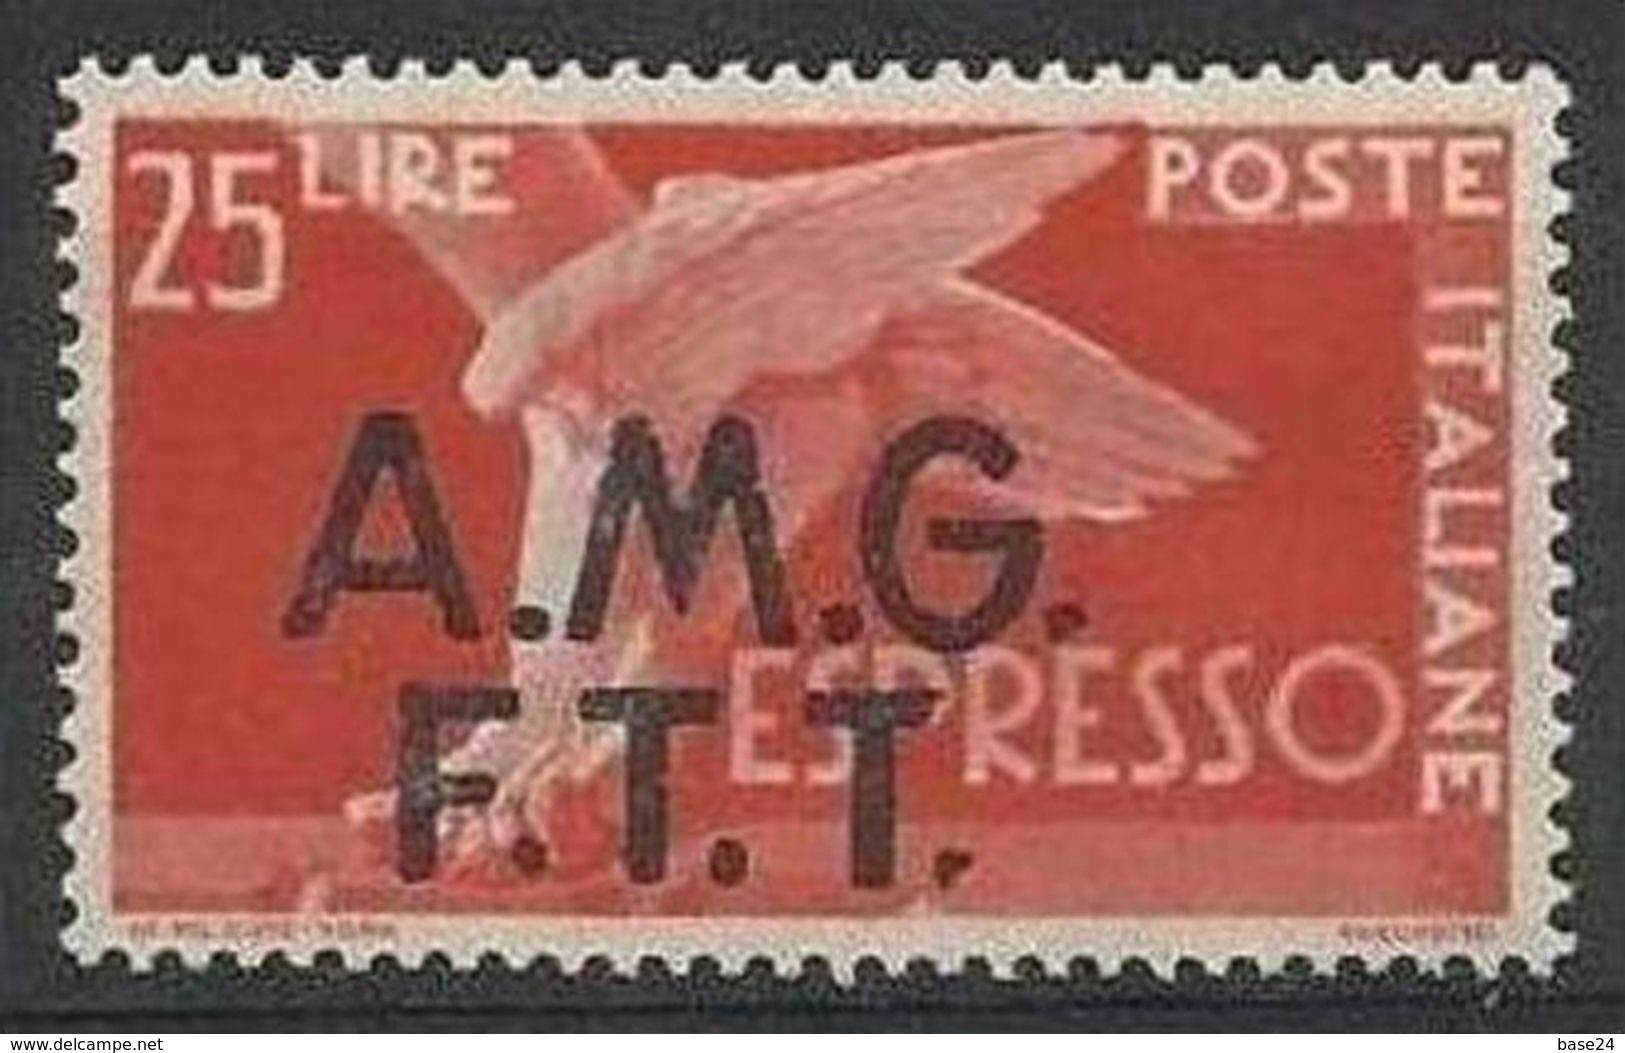 1947 Italia Italy Trieste A ESPRESSO - EXPRESS 25L Espressi Democratica MNH** - Express Mail